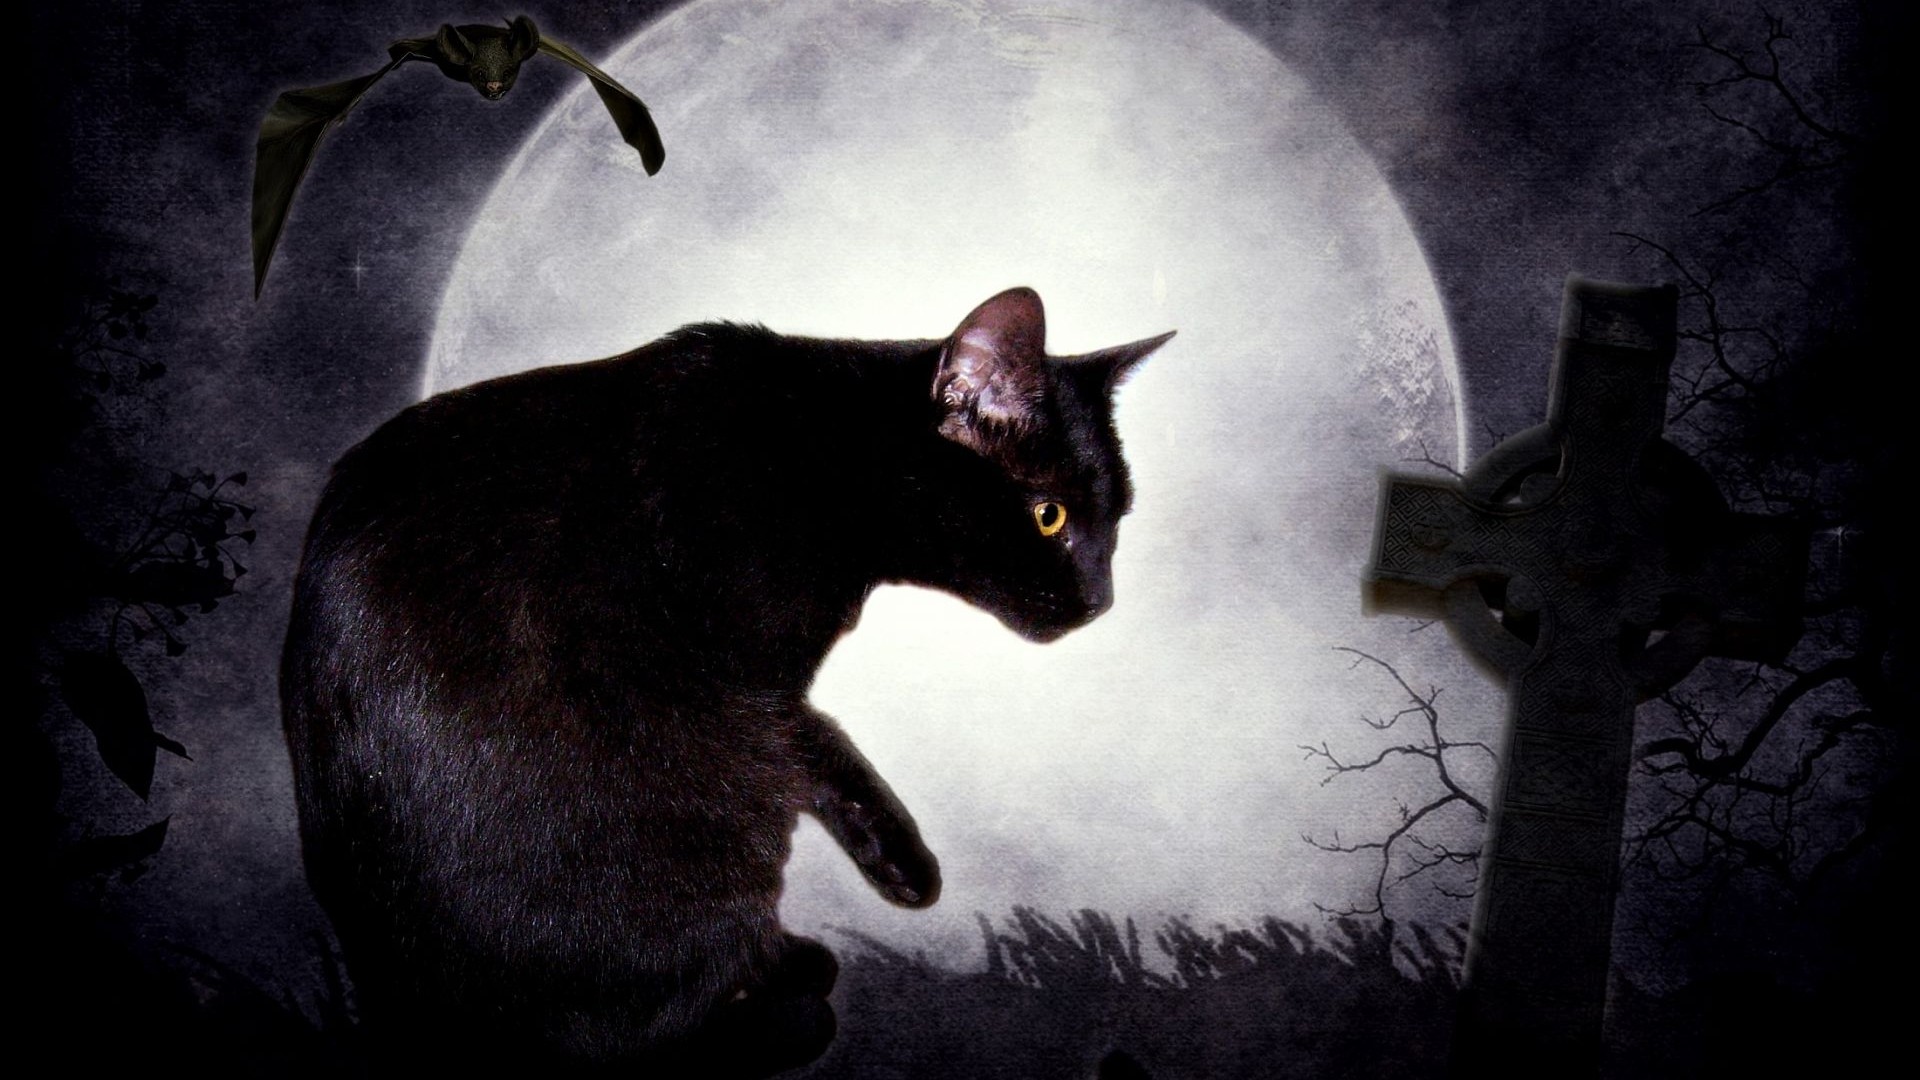 Cemetery Edgar Allan Poe Bats The Black Cat Tombs Wallpaper Background